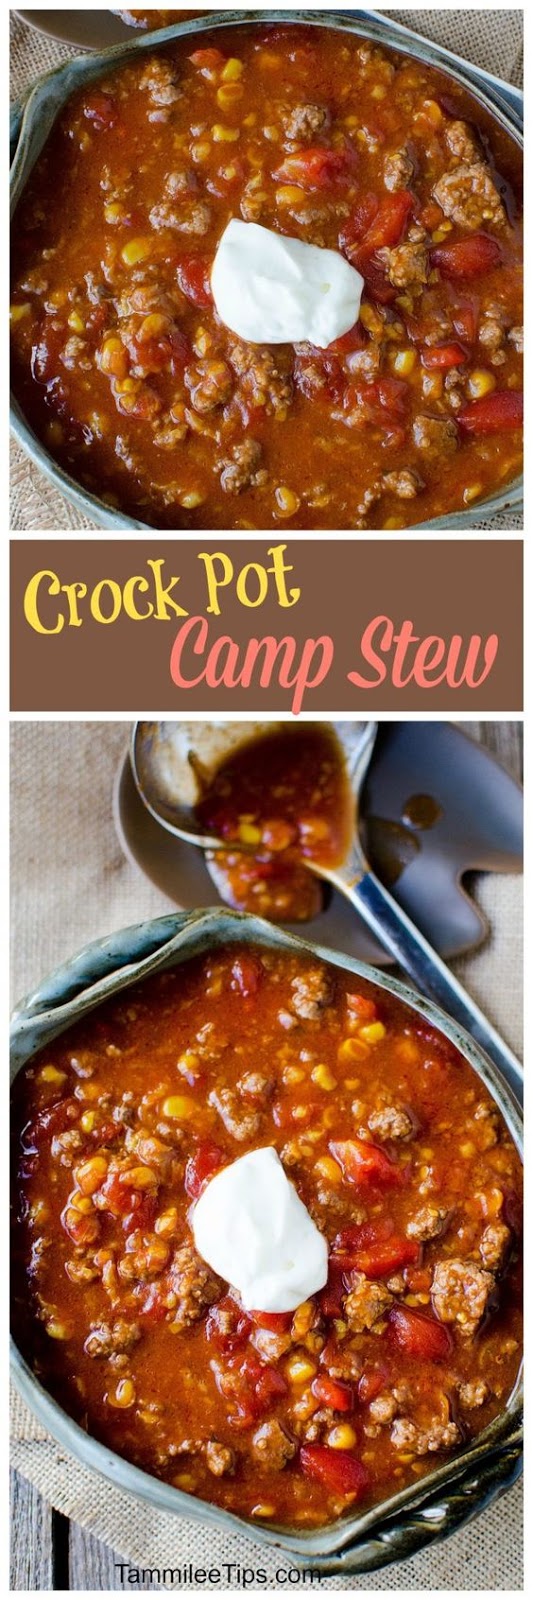 Slow Cooker Crock Pot Camp Stew Recipes